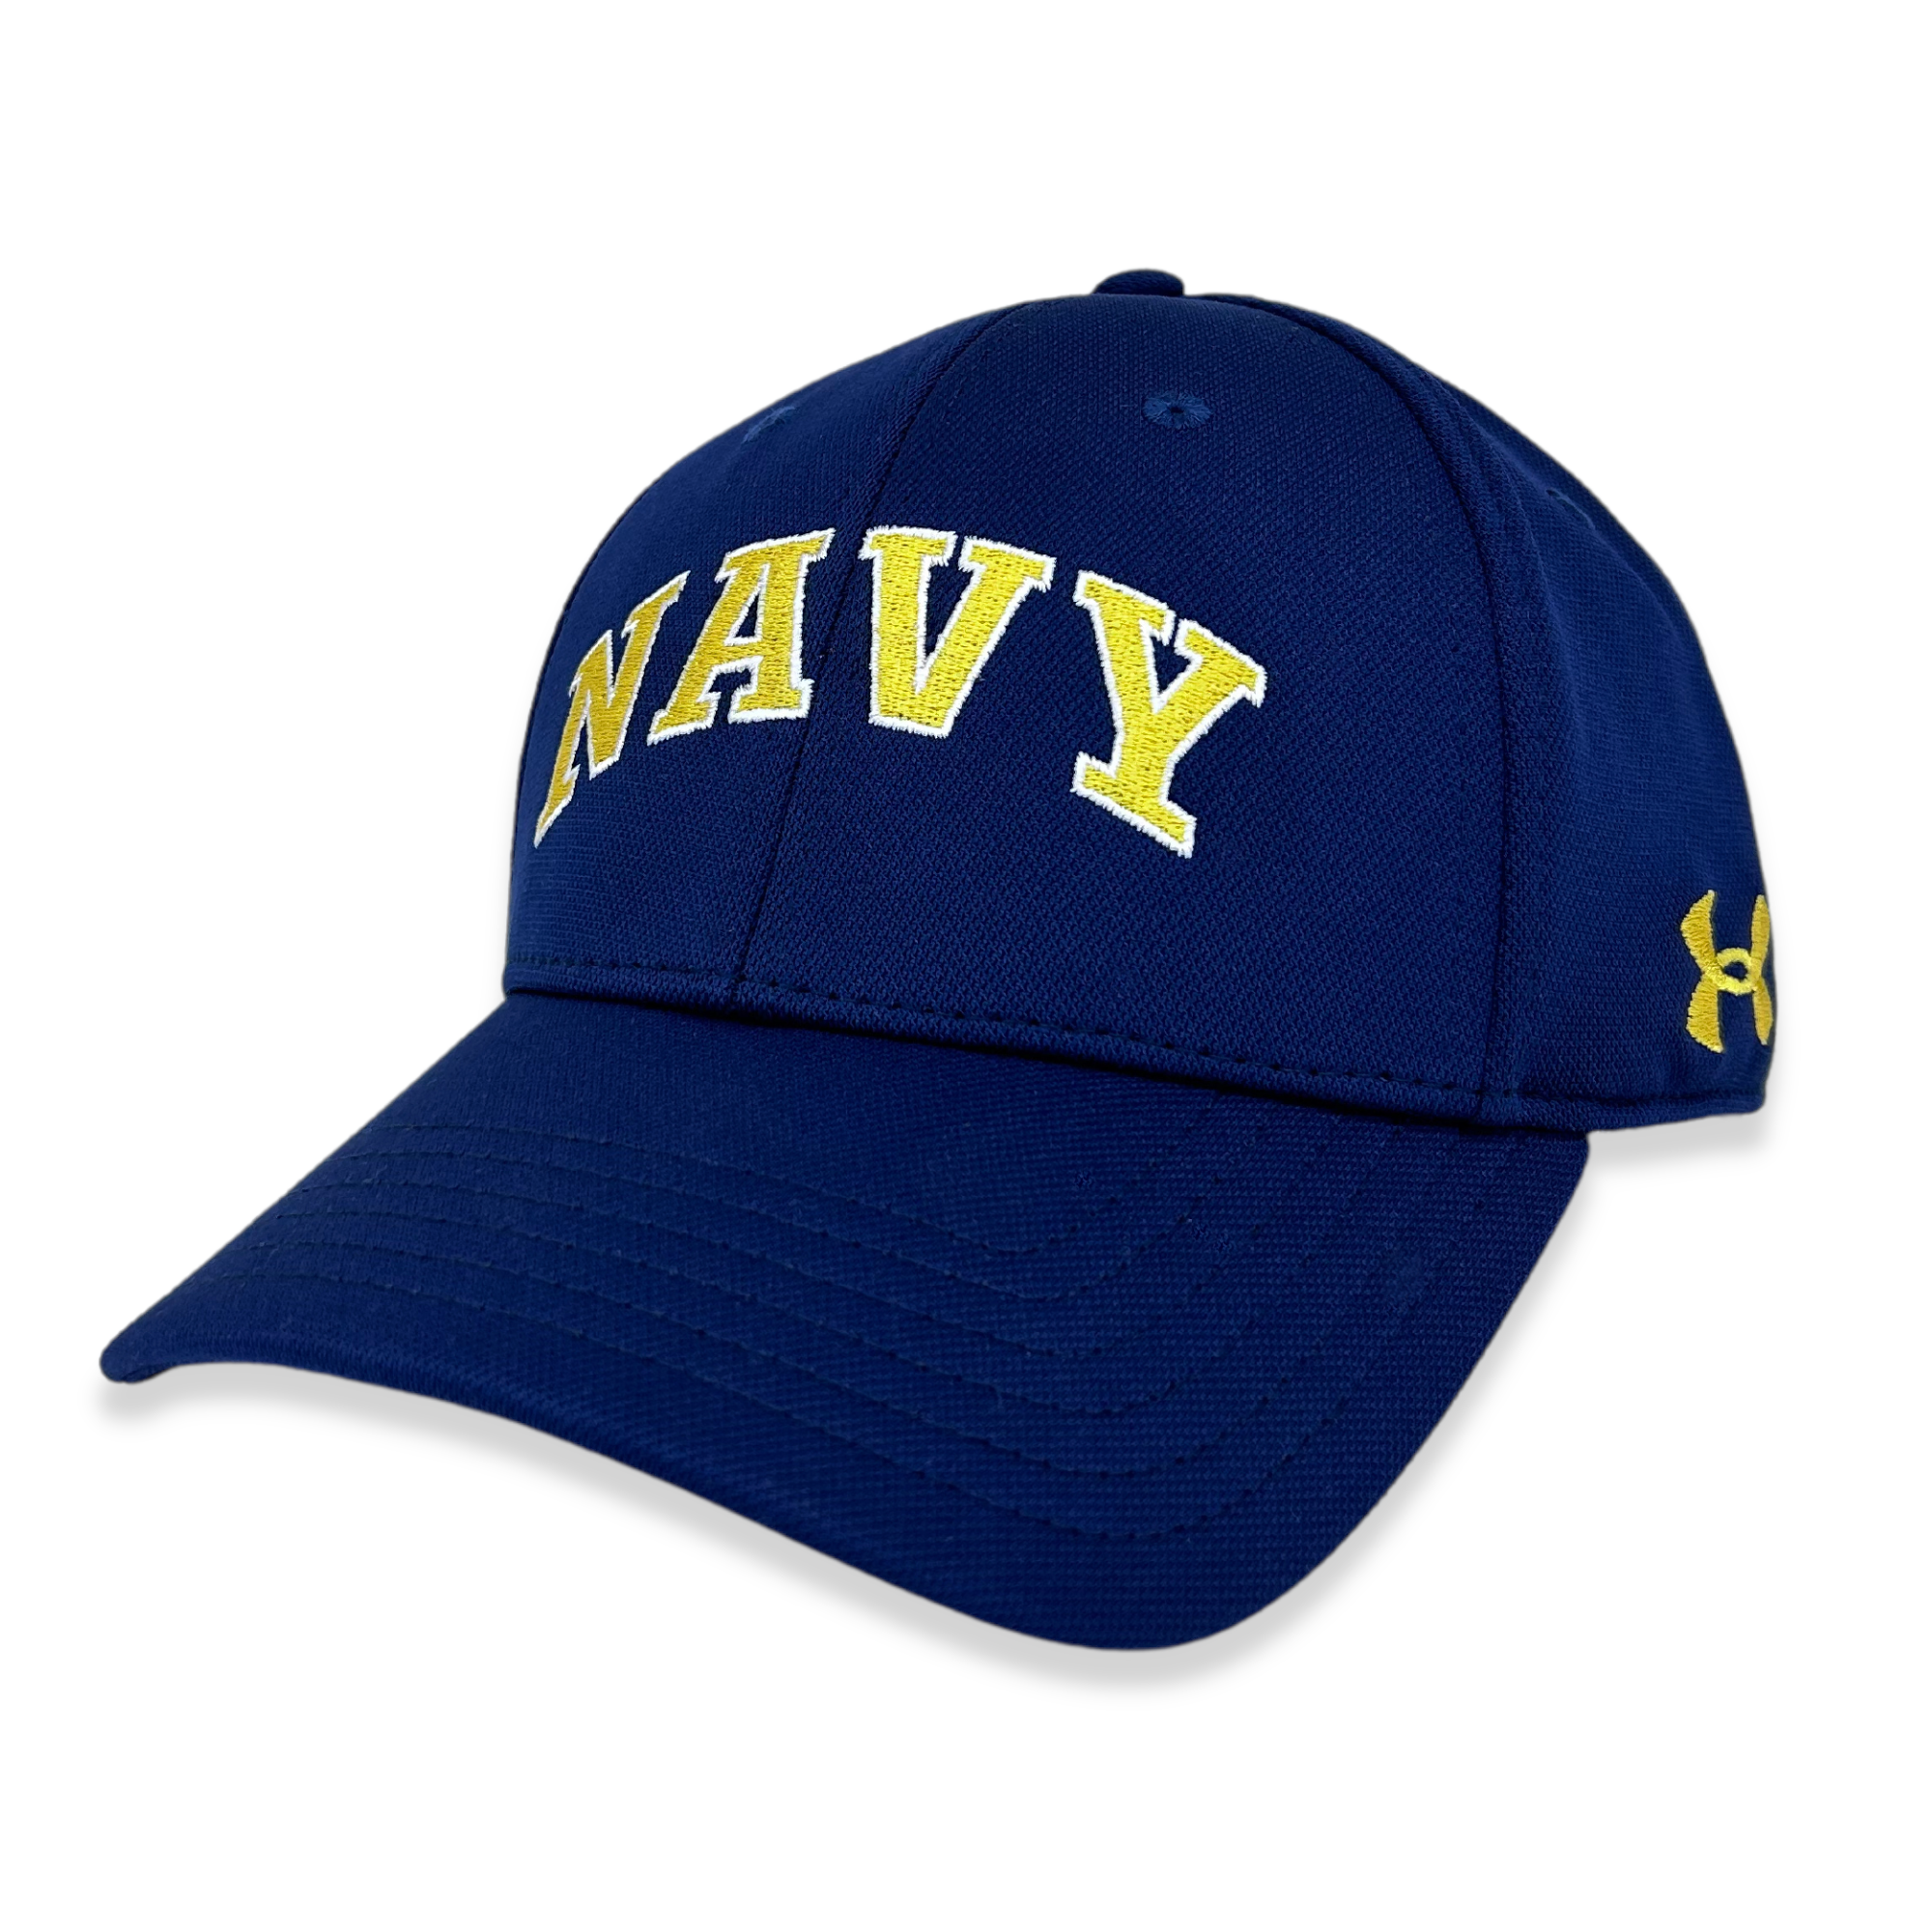 Navy Under Blitzing (Navy) Armour Hat Flex Fit